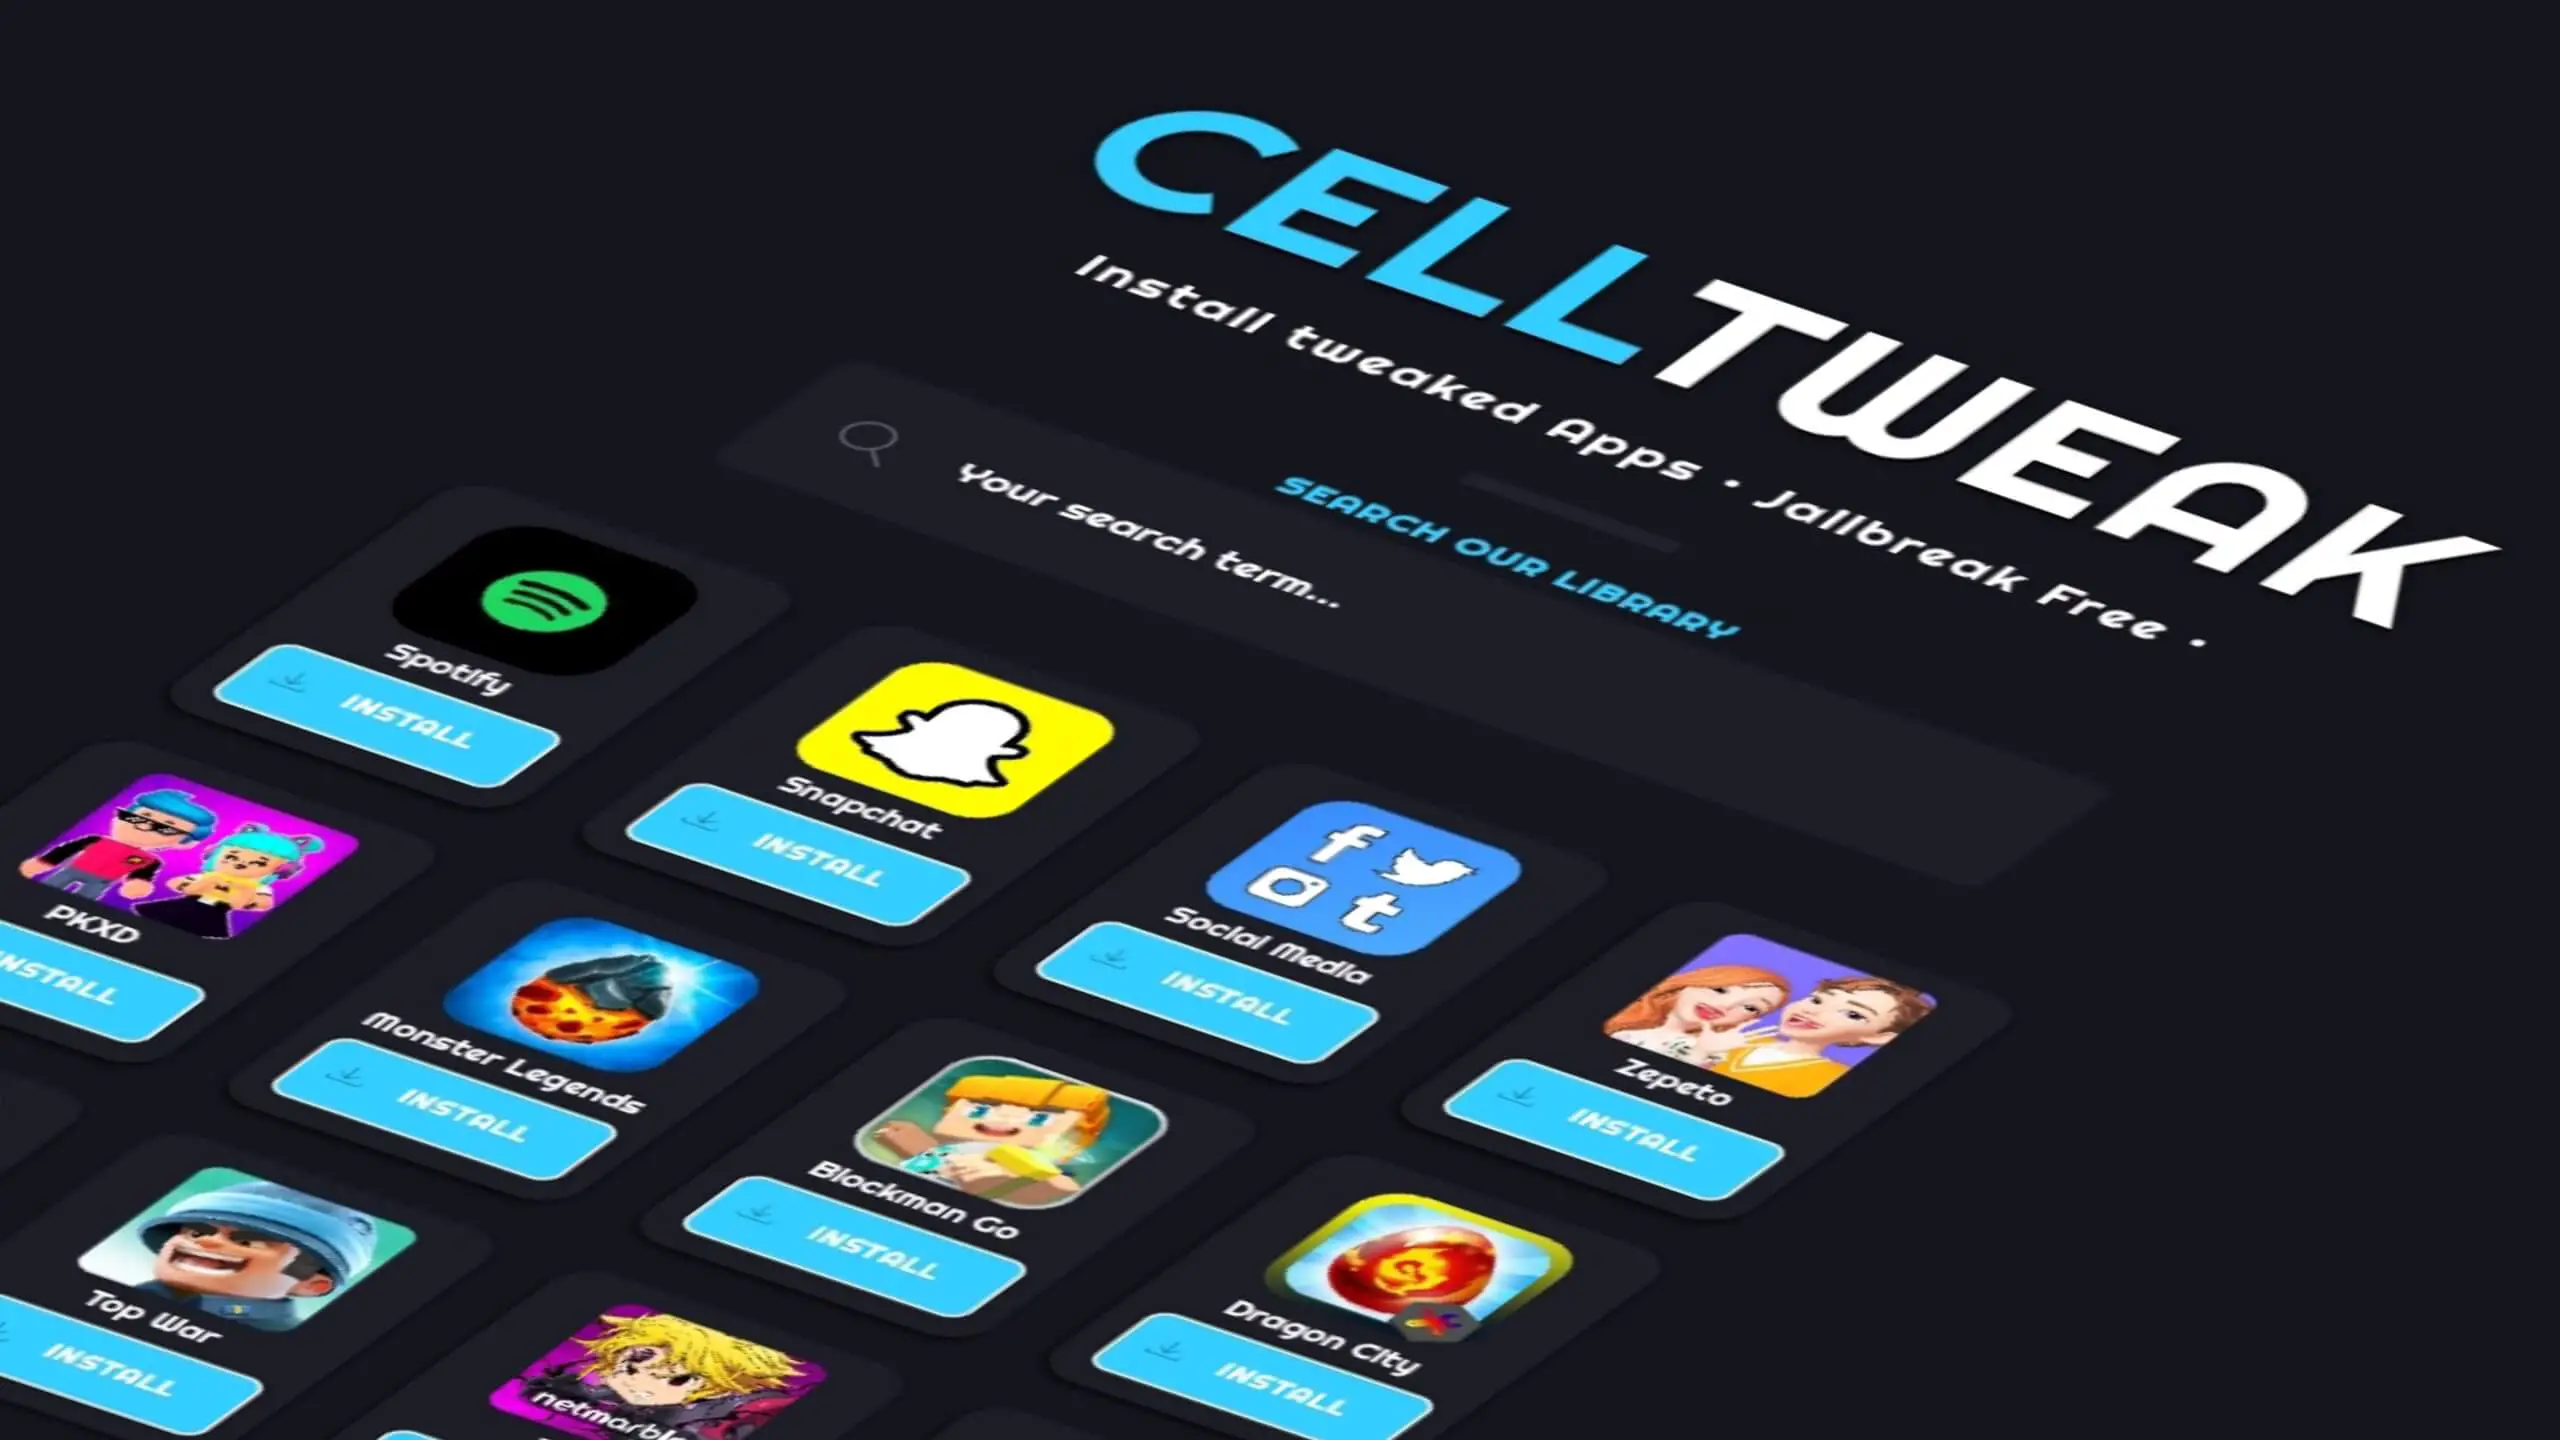 Celltweak.com Review: Install Tweaked Apps, Is it Safe?